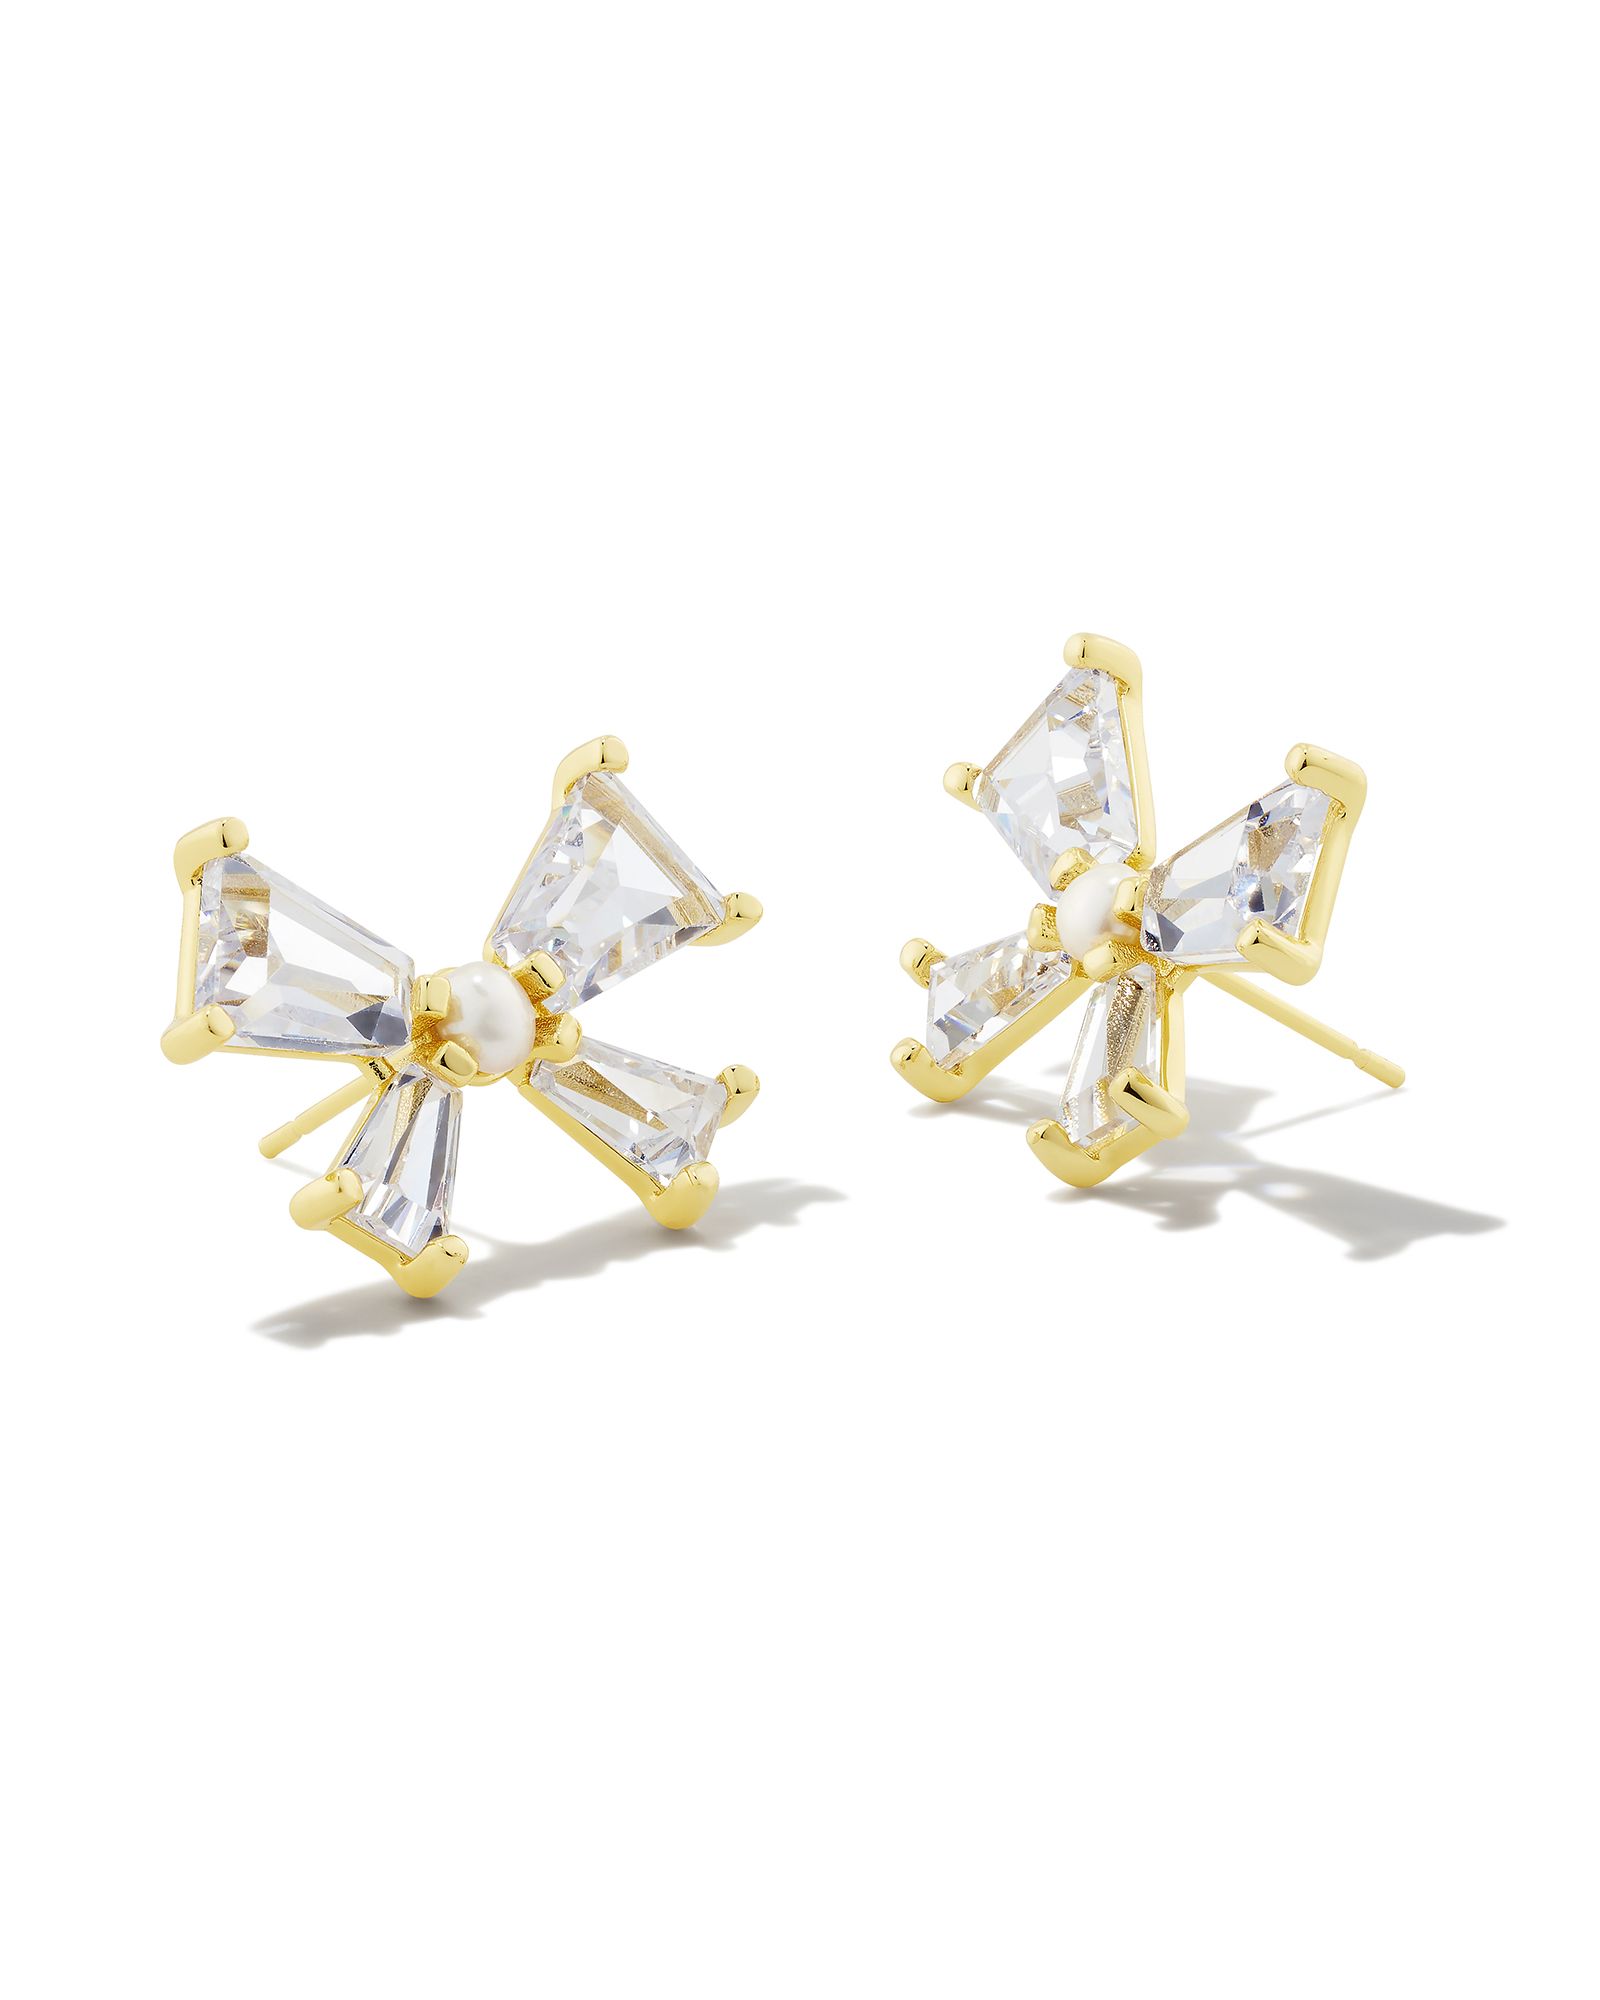 Blair Gold Bow Stud Earrings in White Crystal | Kendra Scott